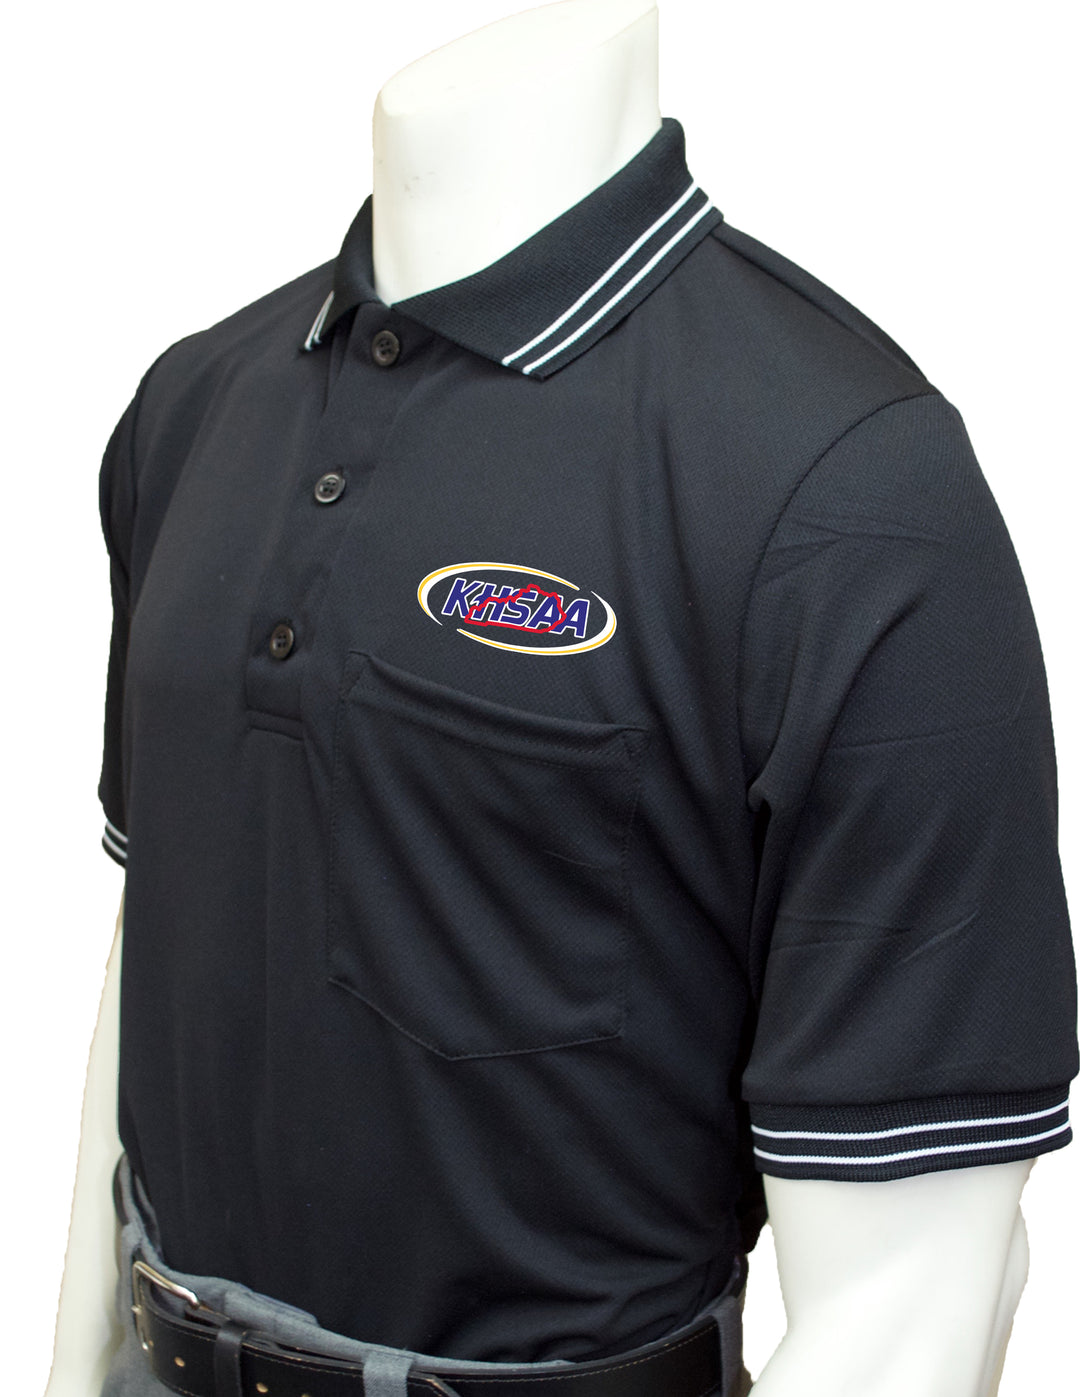 USA300KY - Smitty "Made in USA" - Baseball Men's Short Sleeve Shirt Black